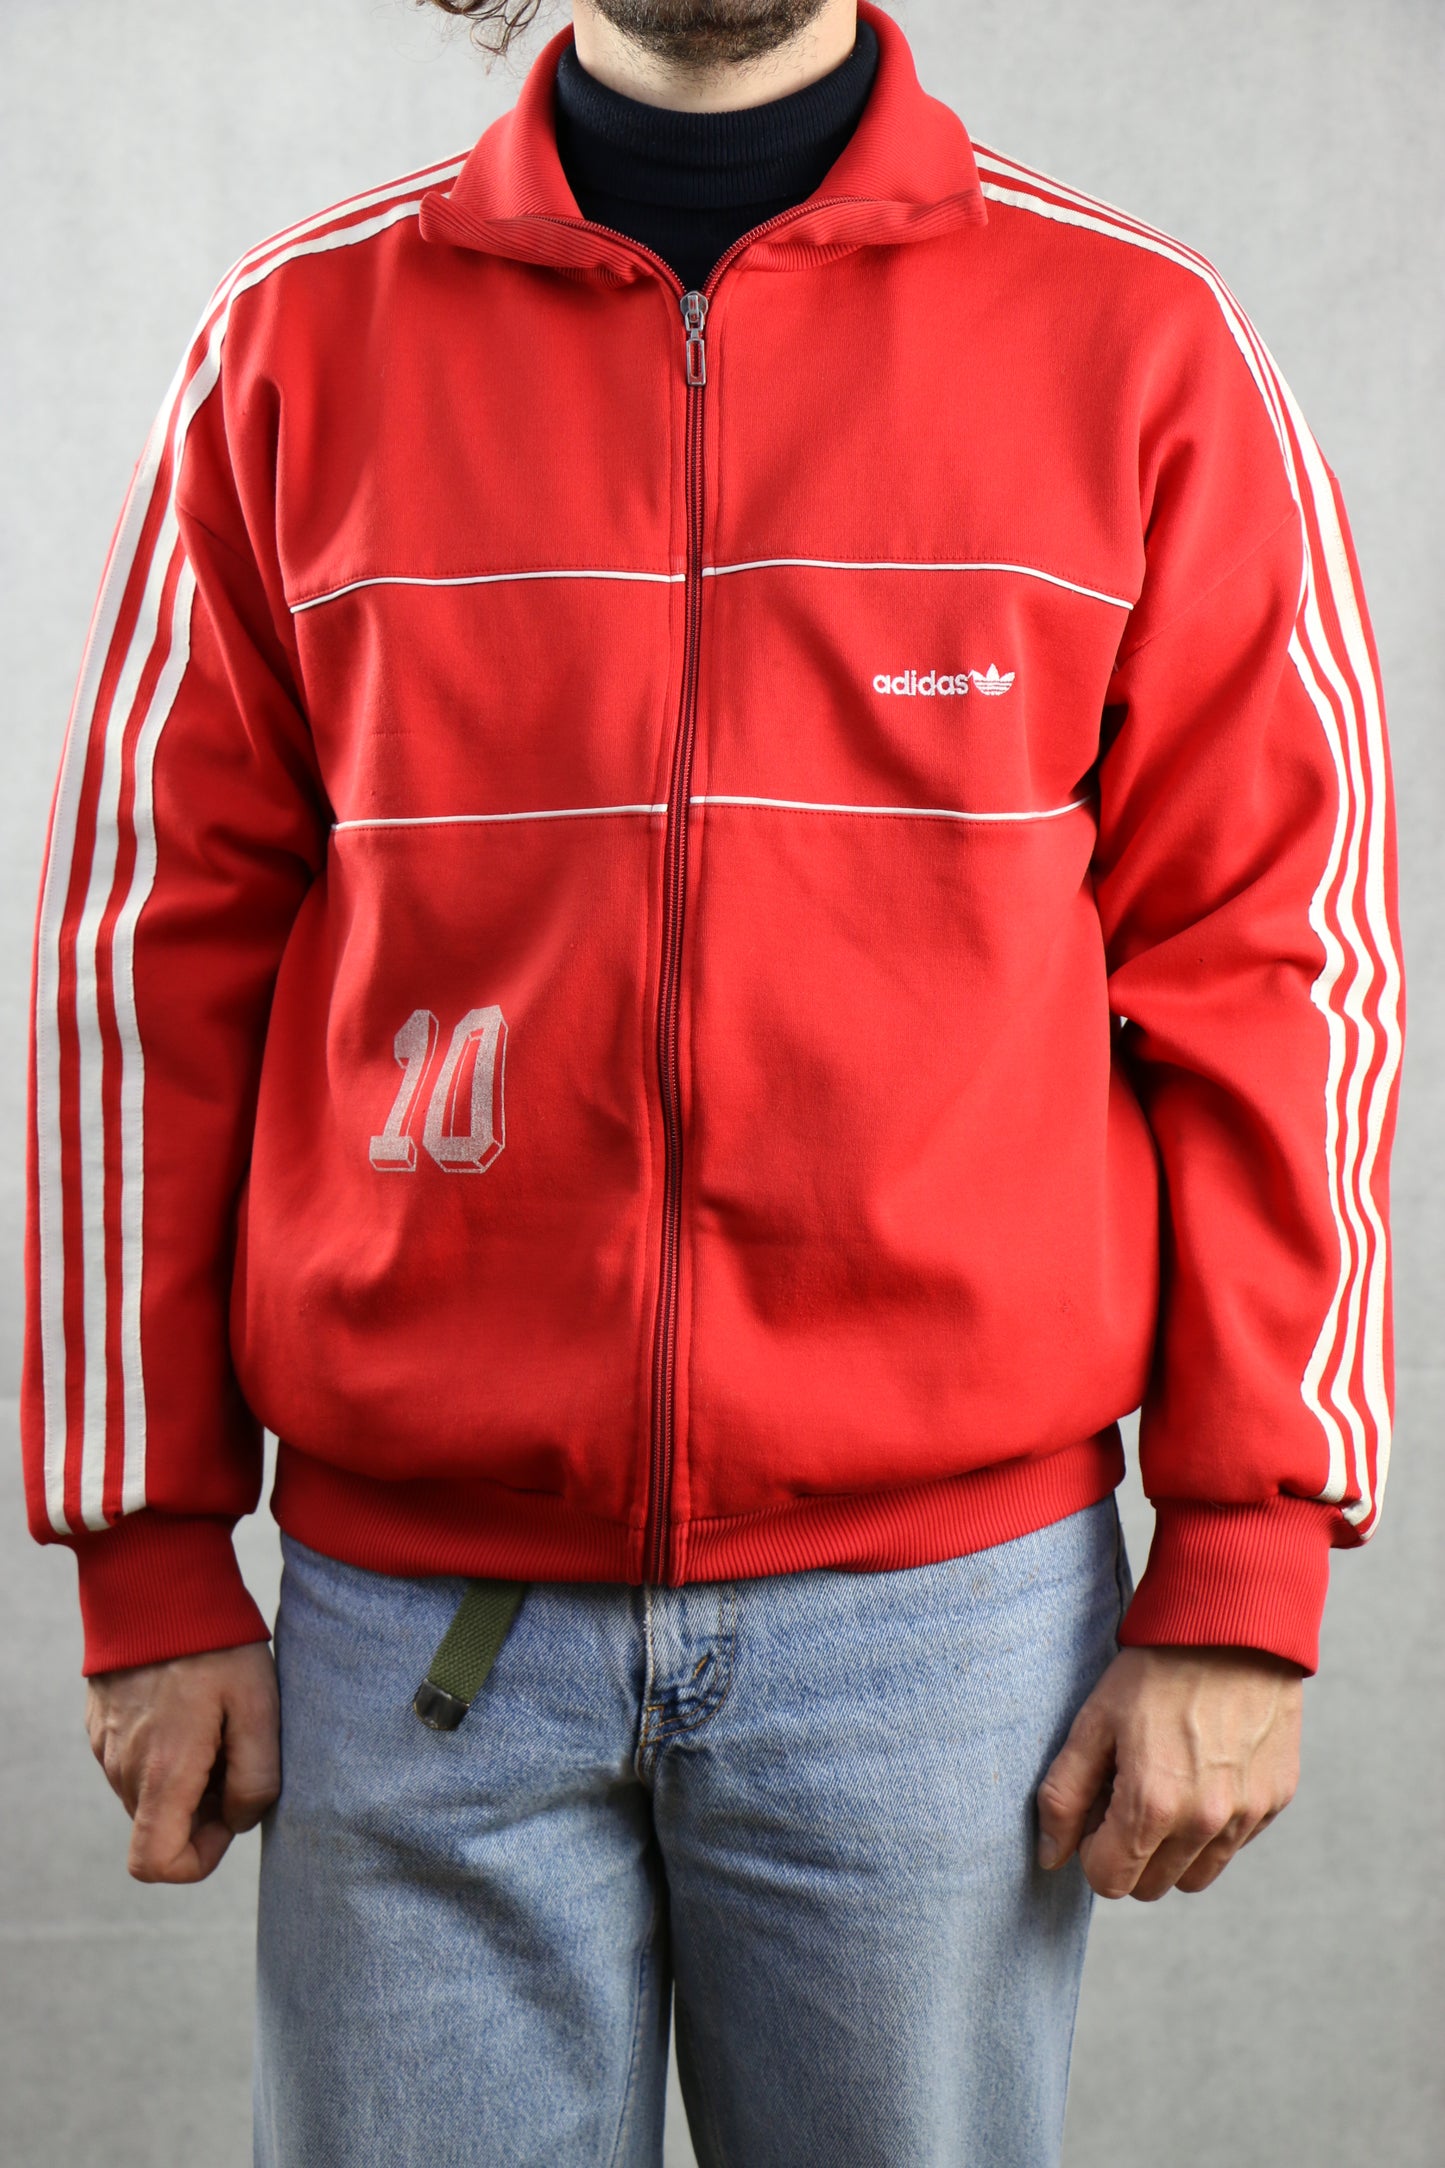 Adidas Red Track Jacket - vintage clothing clochard92.com